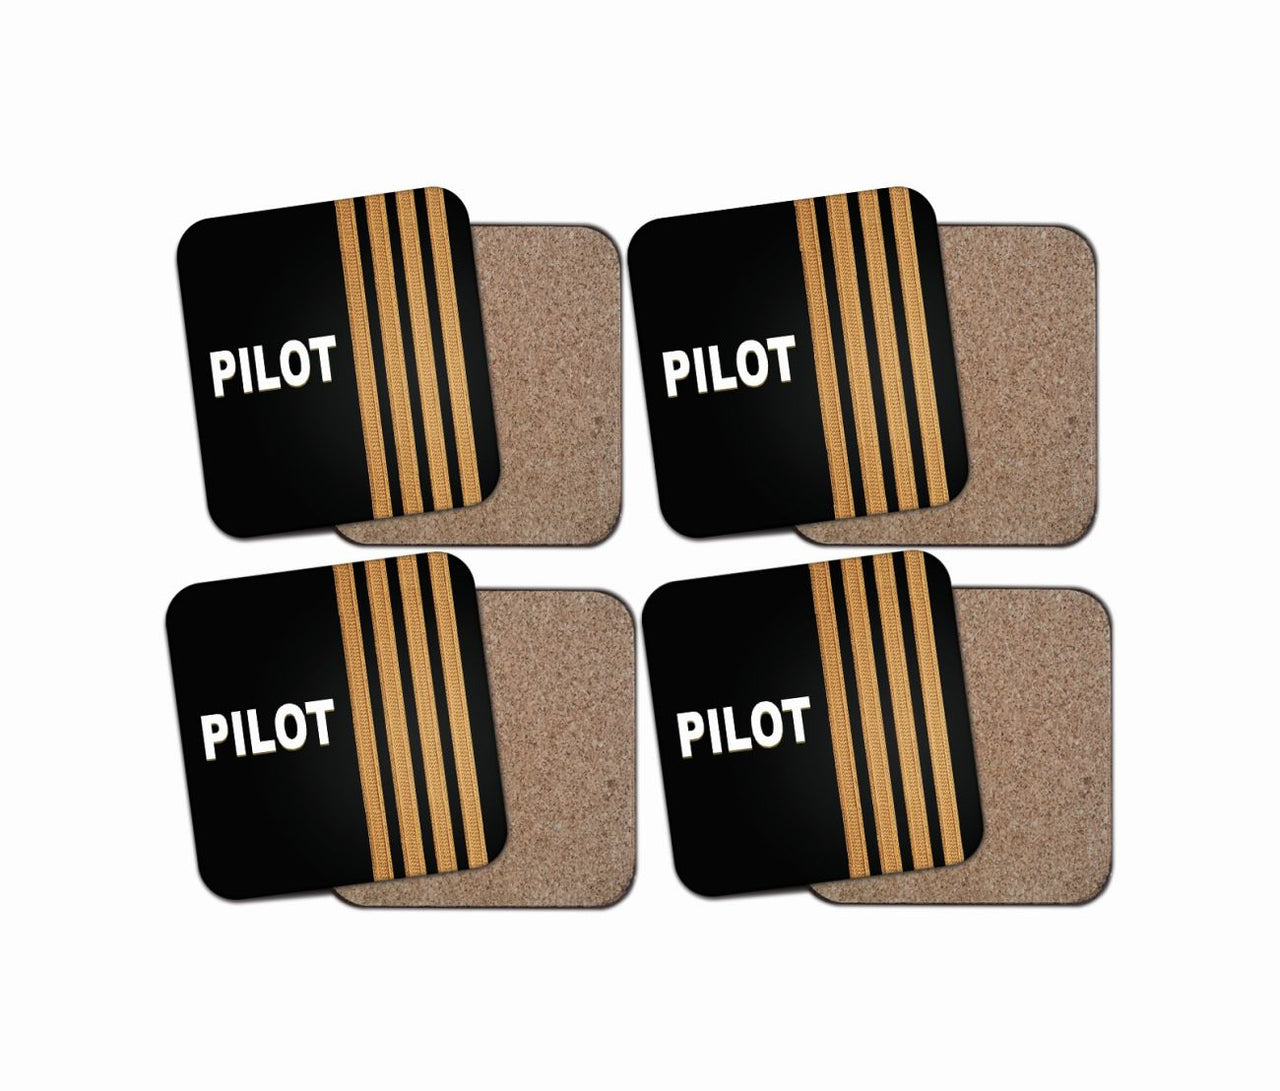 PILOT & Epaulettes 4 Lines Designed Coasters